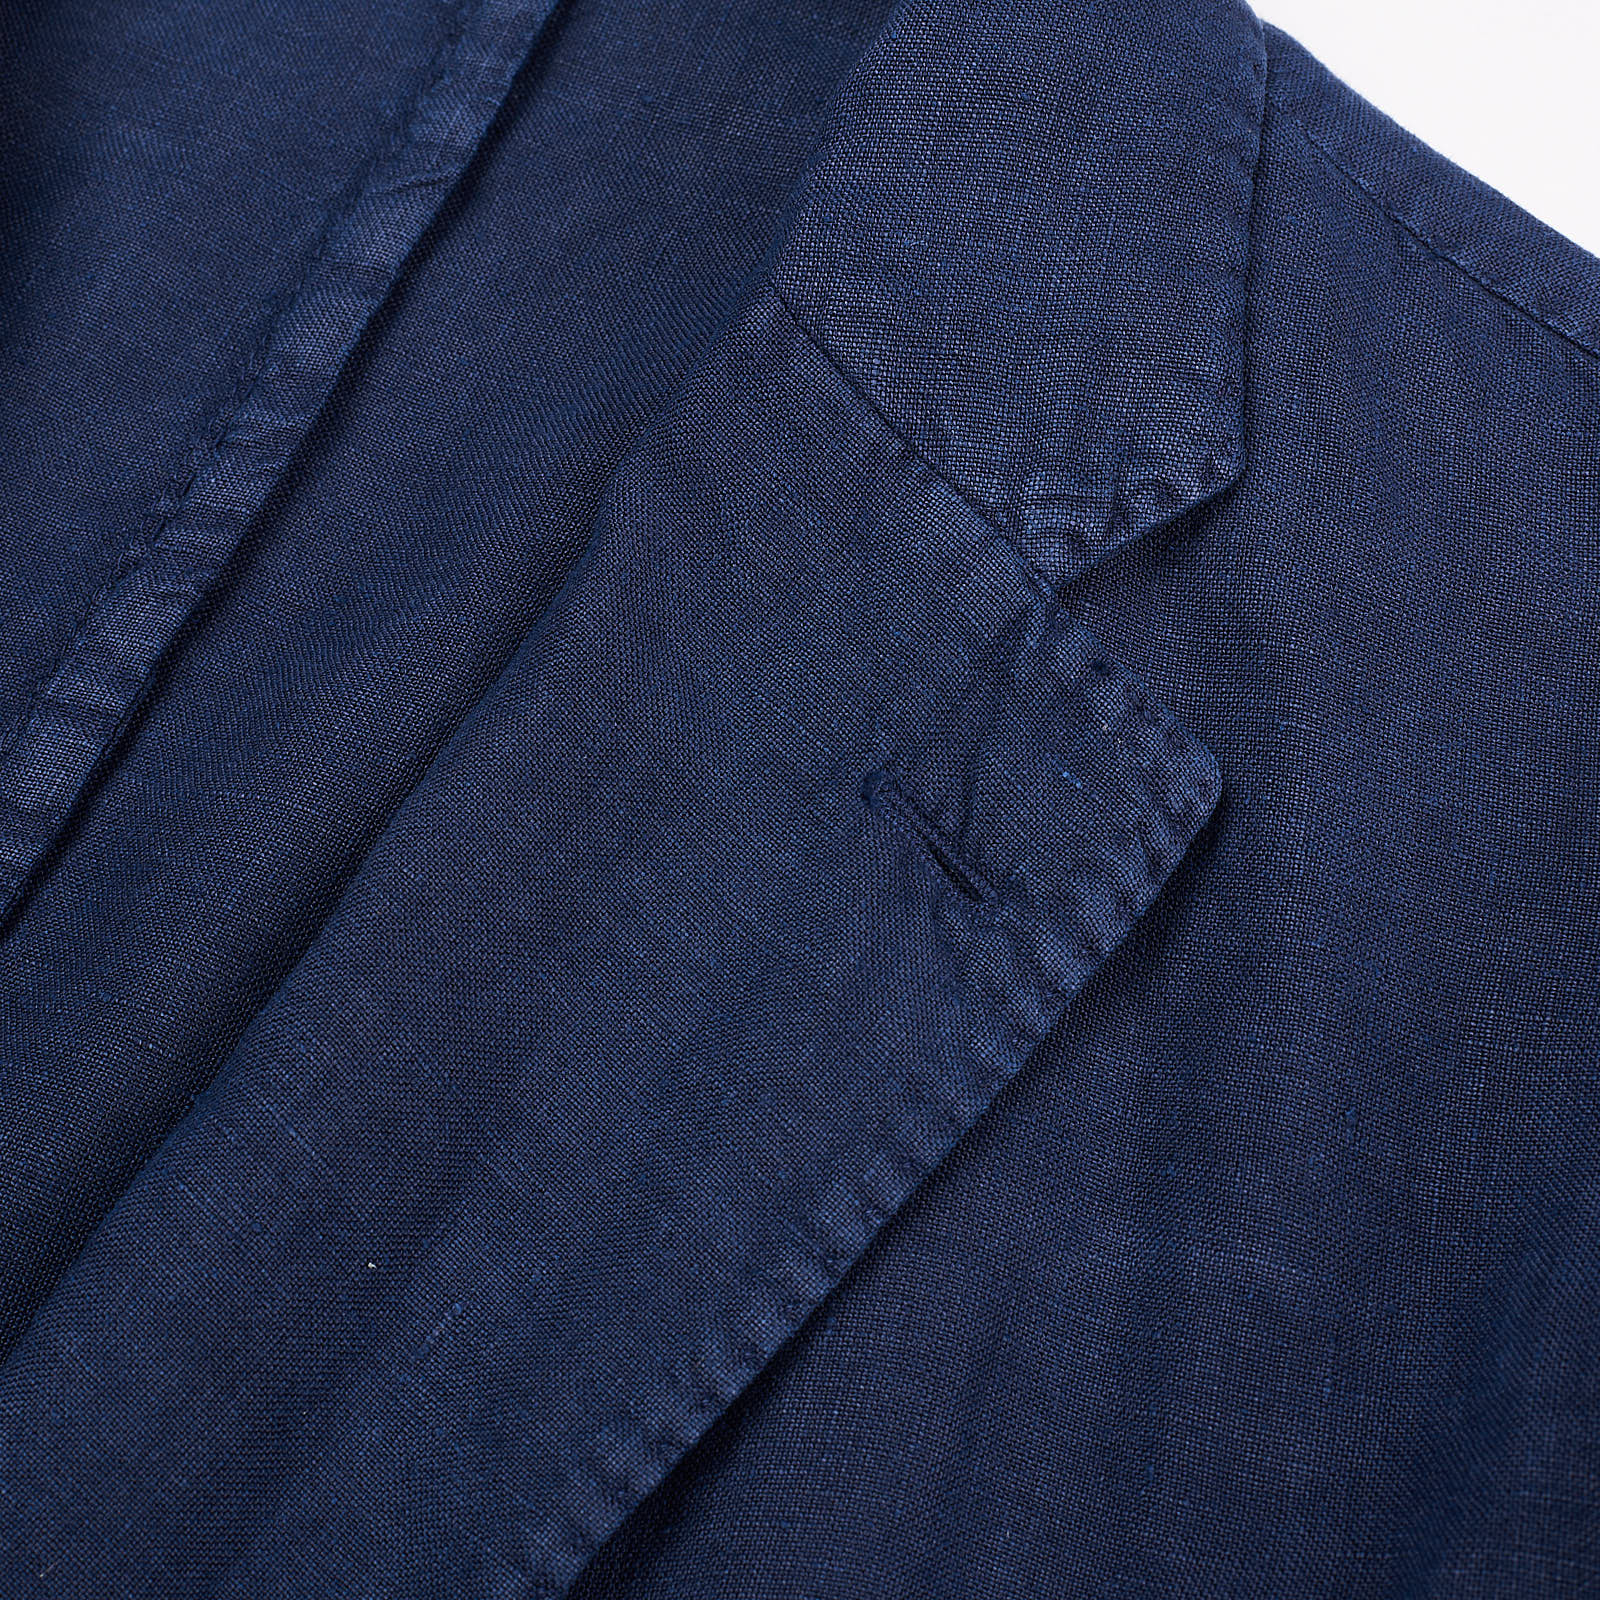 BOGLIOLI Milano "K. Jacket" Navy Blue Linen Unlined Suit EU 56 NEW US 46 Slim Fit